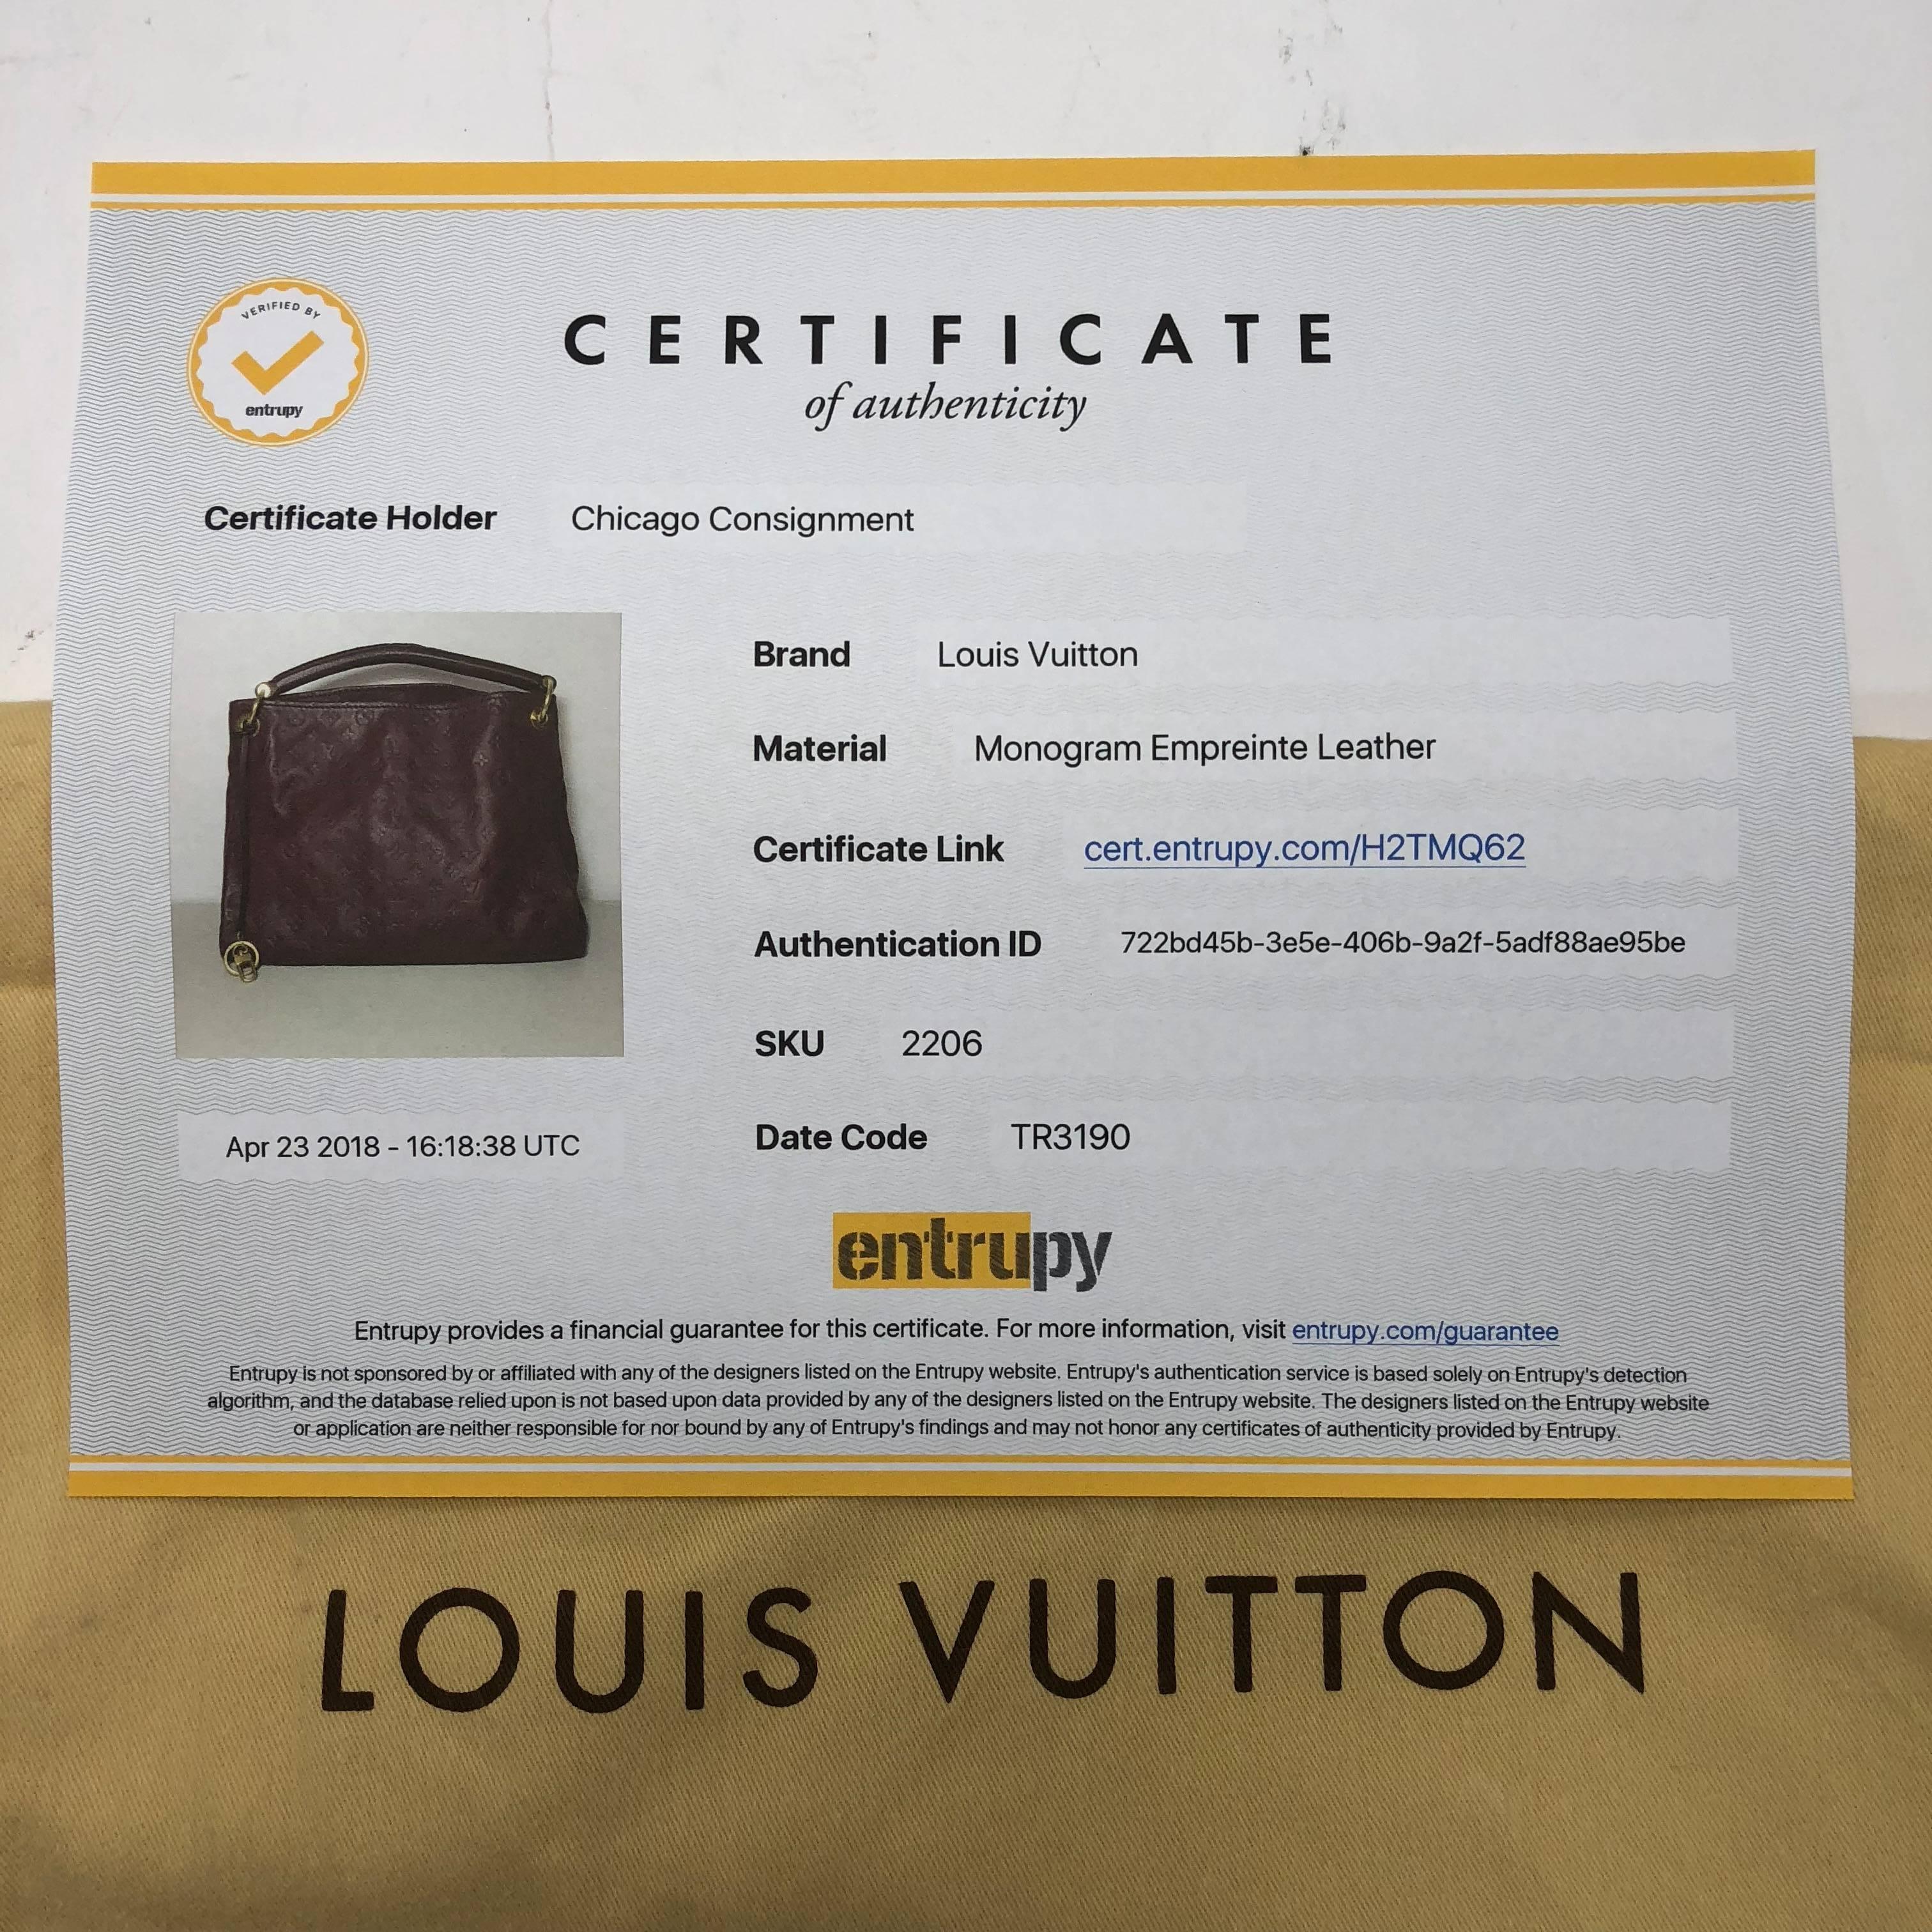 MODEL - Louis Vuitton Empriente Artsy MM in Raisin

CONDITION - Exceptional. No visible signs of wear.

SKU - 2206

ORIGINAL RETAIL PRICE - 3150 + tax

DATE/SERIAL CODE - TR3190

ORIGIN - France

PRODUCTION - 2010

DIMENSIONS - L16.5 x H12.6 x